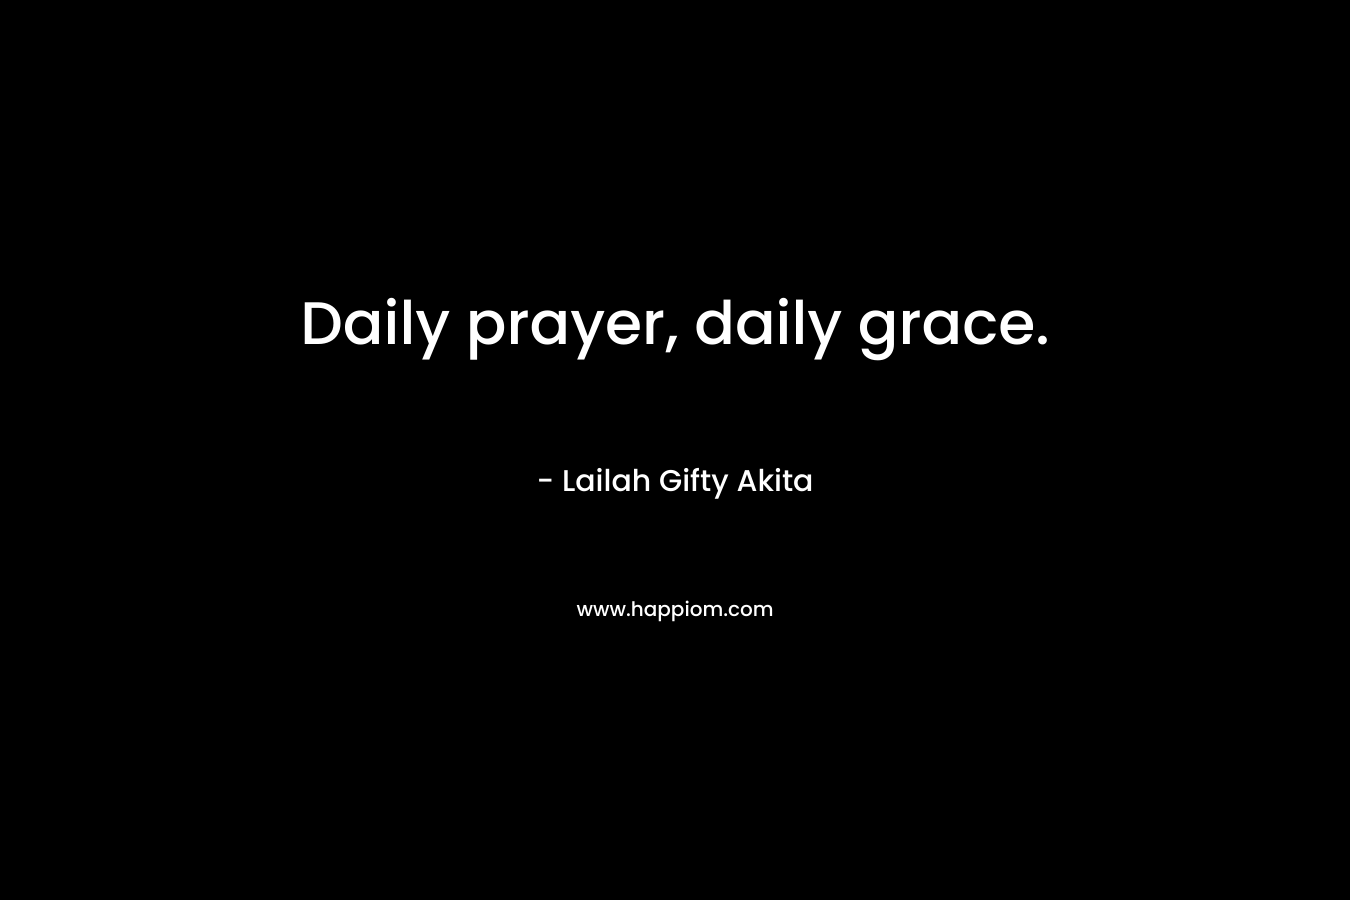 Daily prayer, daily grace.